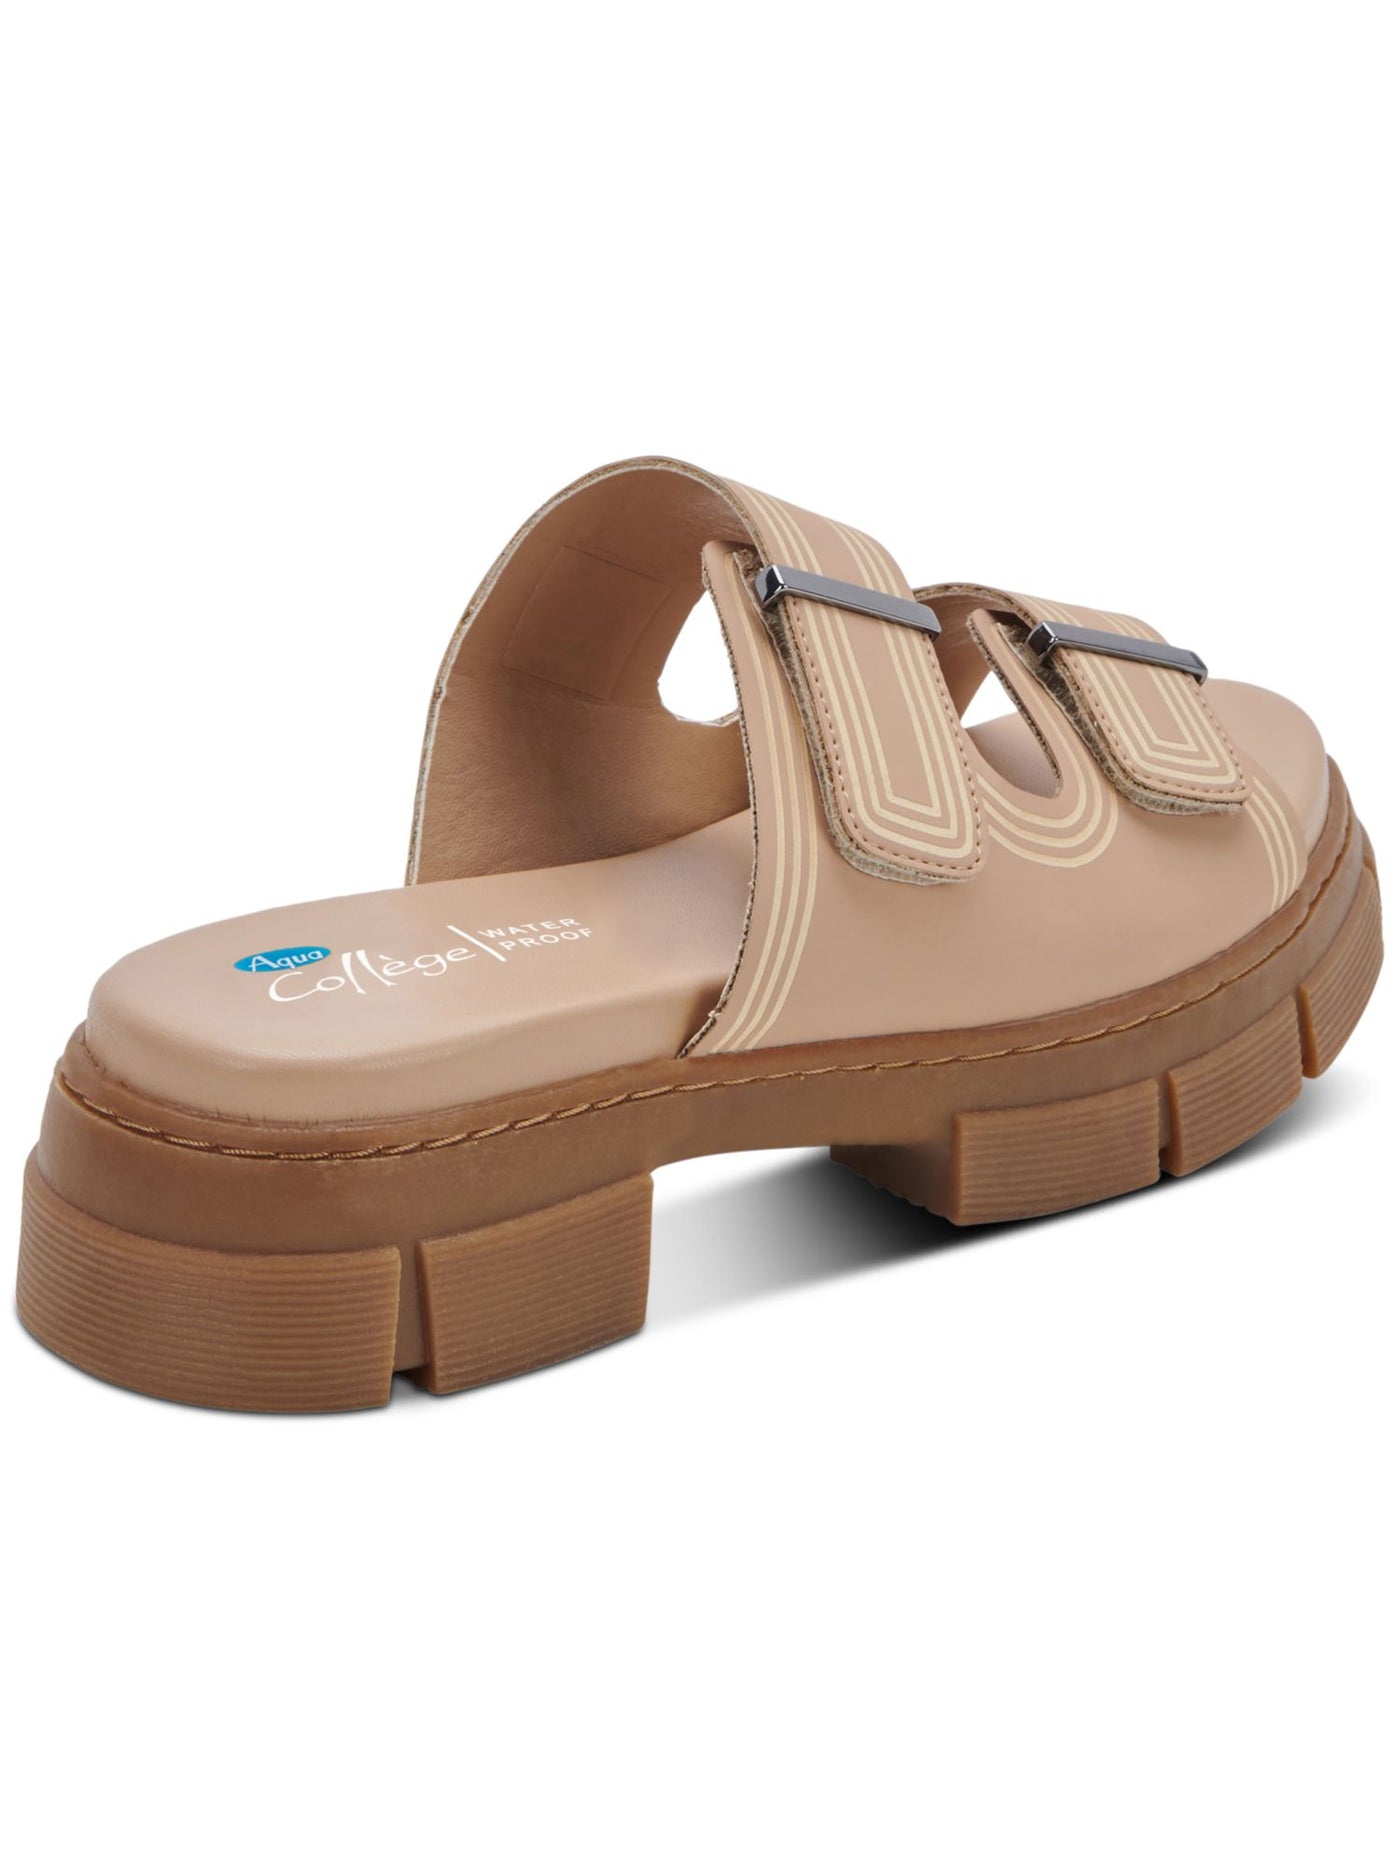 AQUA COLLEGE Womens Beige Adjustable Strap Water Resistant Hippie Round Toe Block Heel Slip On Slide Sandals Shoes 10 M